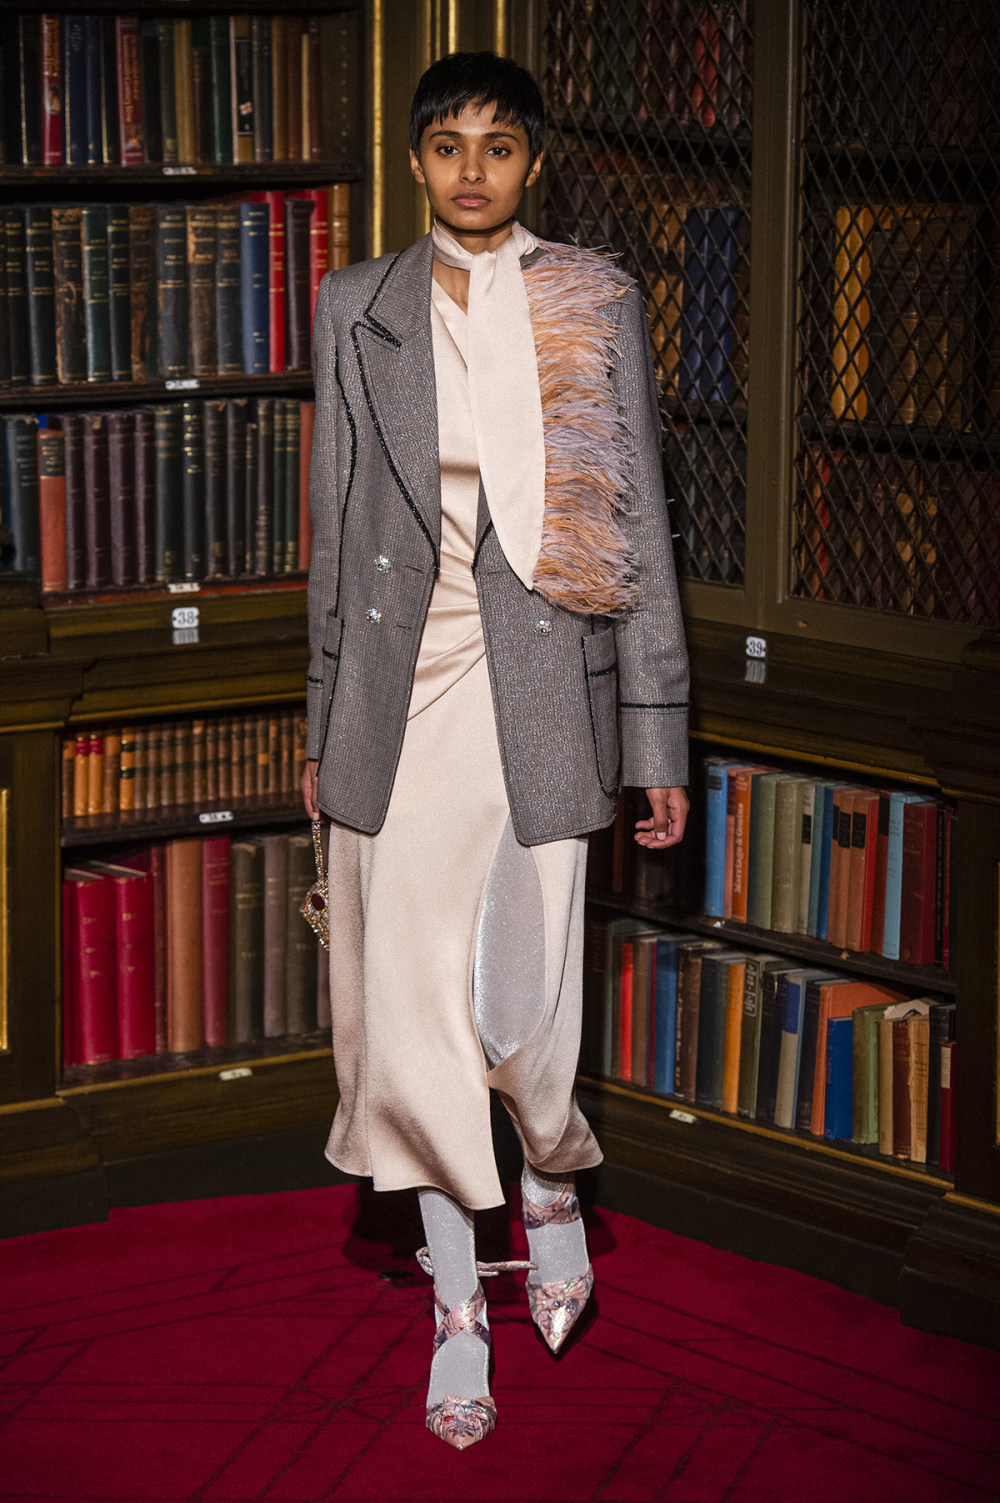 Peter Pilotto时装系列礼服外套是亮橙色雪尼尔羊毛饰有粉色薄纱-3.jpg